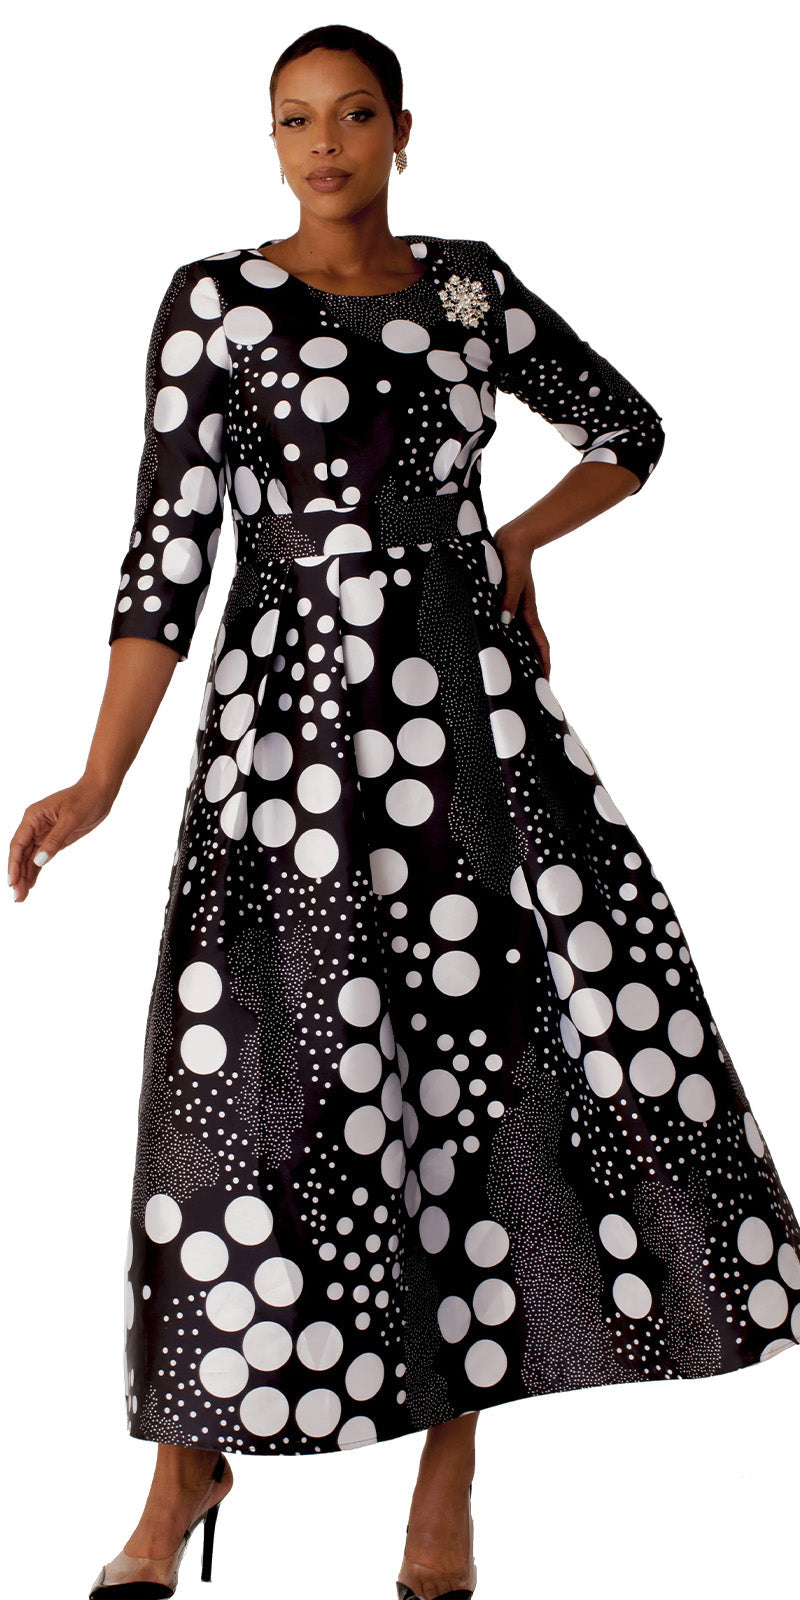 Tally Taylor Church Dress 4497-Black/White Dots